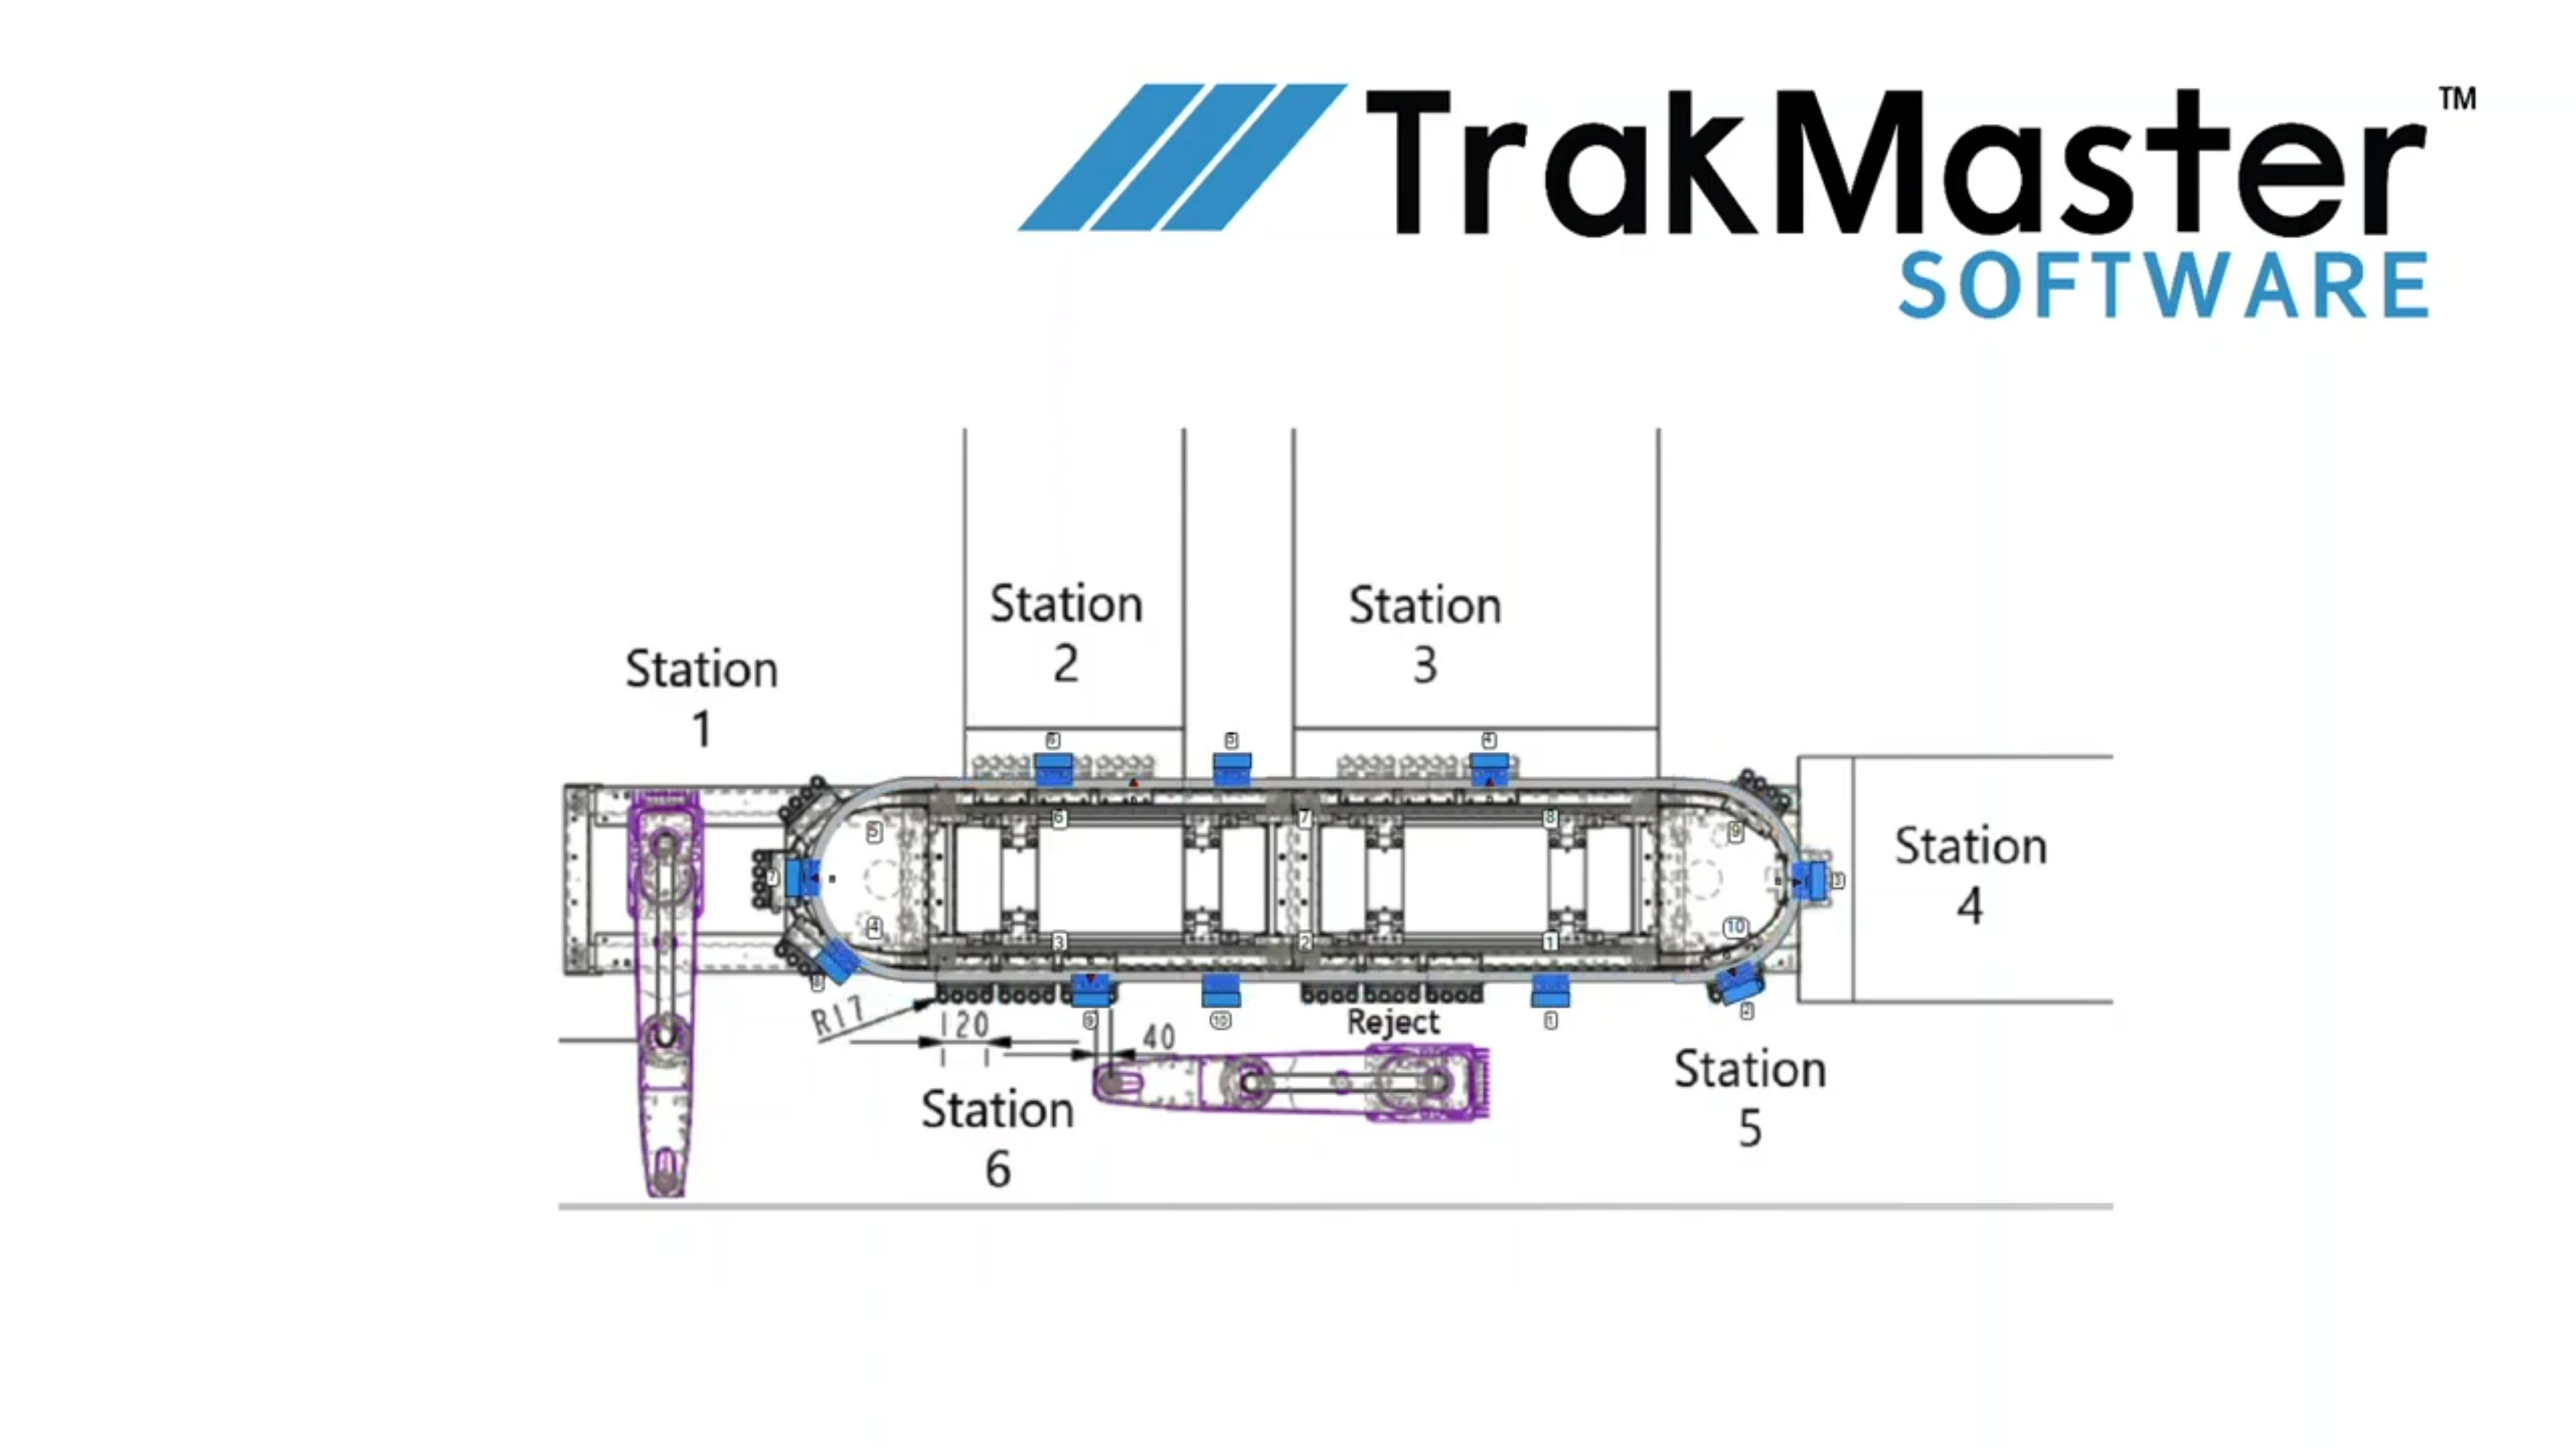 ATS-TrakMaster-Simulation-Software